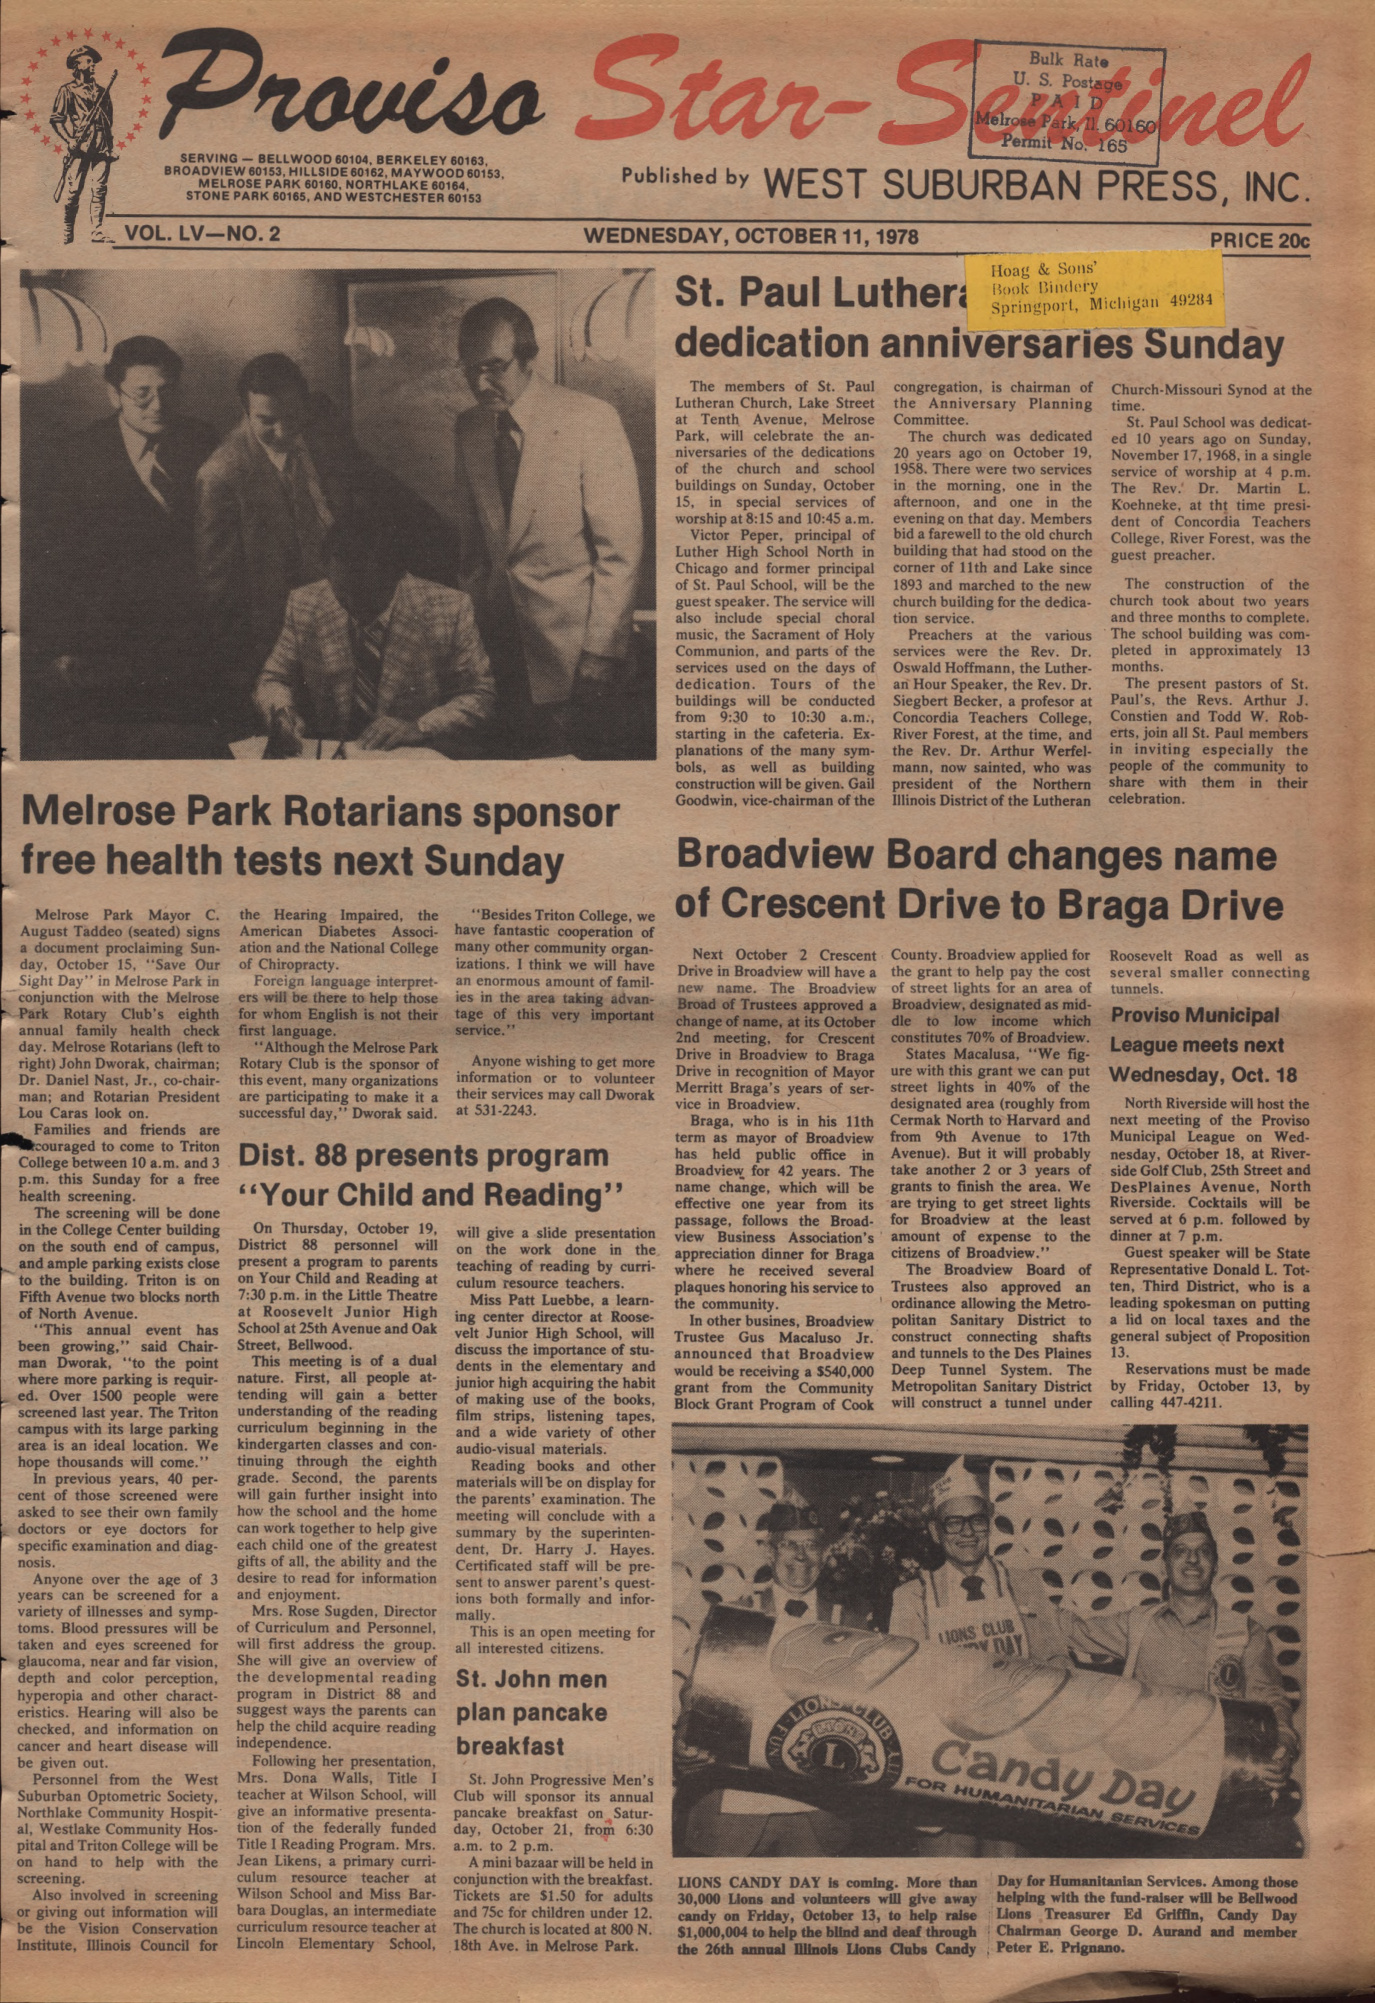 Proviso Star-Sentinel – 19781011